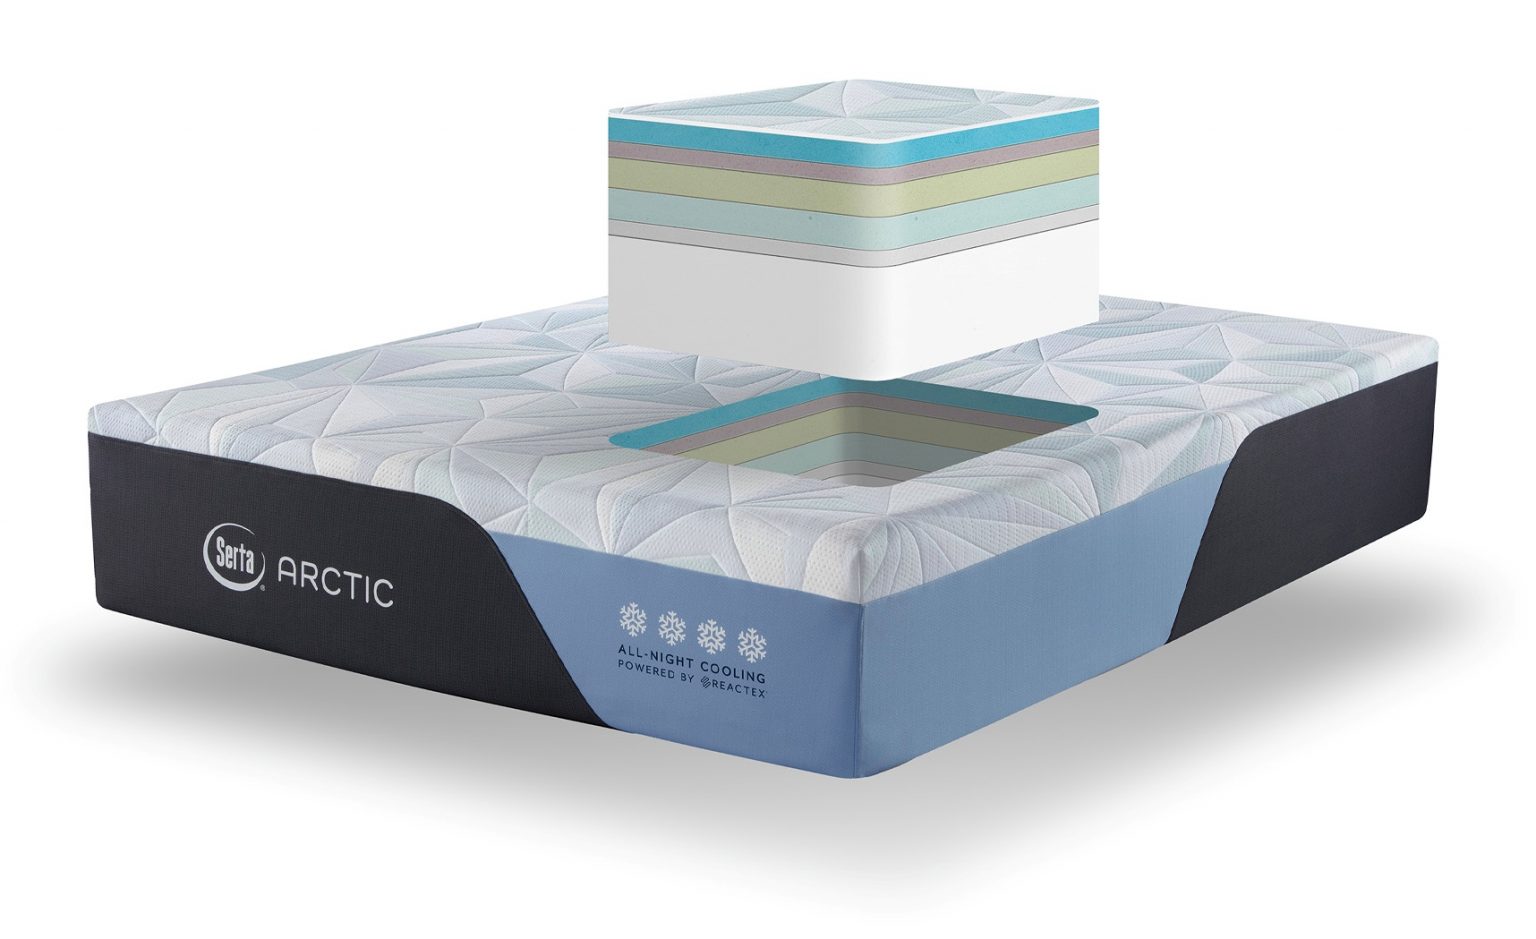 serta arctic hybrid mattress medium details